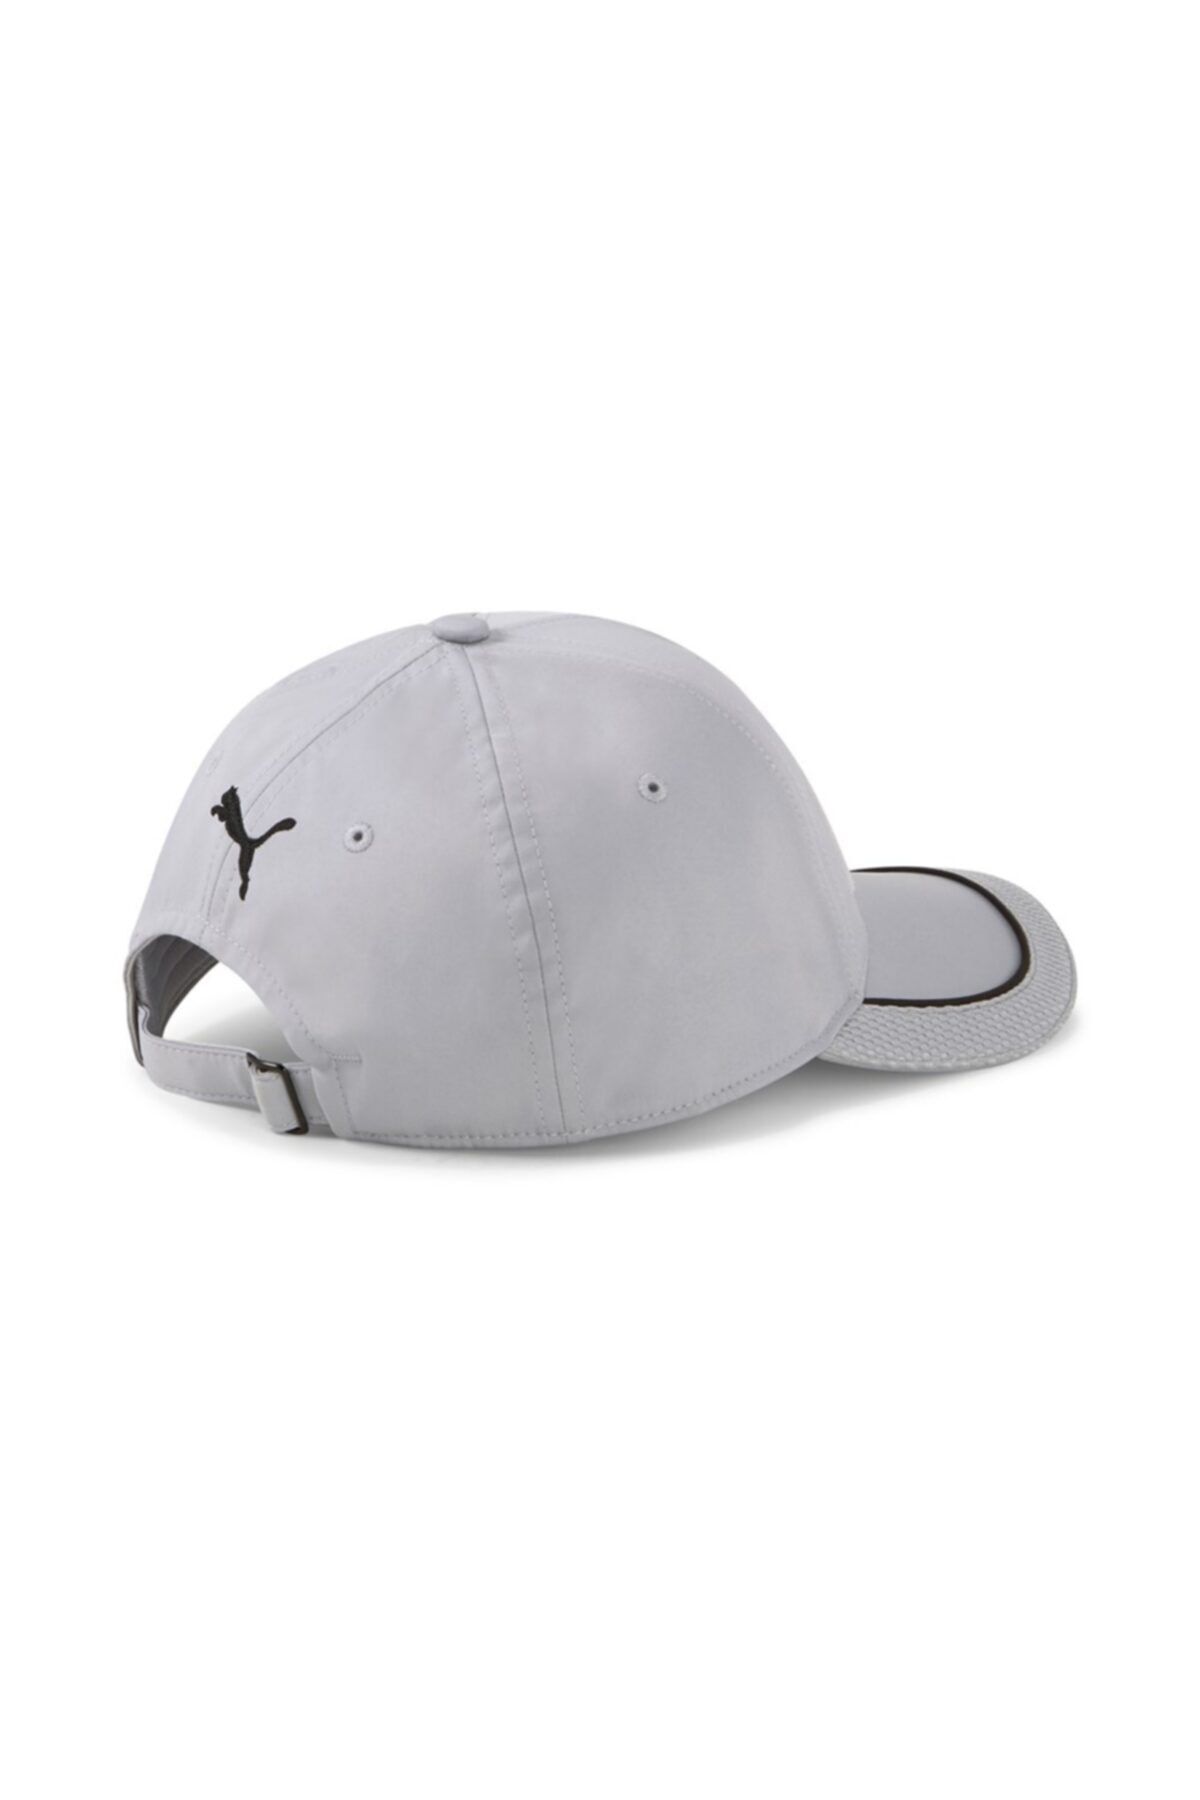 Puma کلاه خاکستری MAPF1 BB UNISEX 02349702